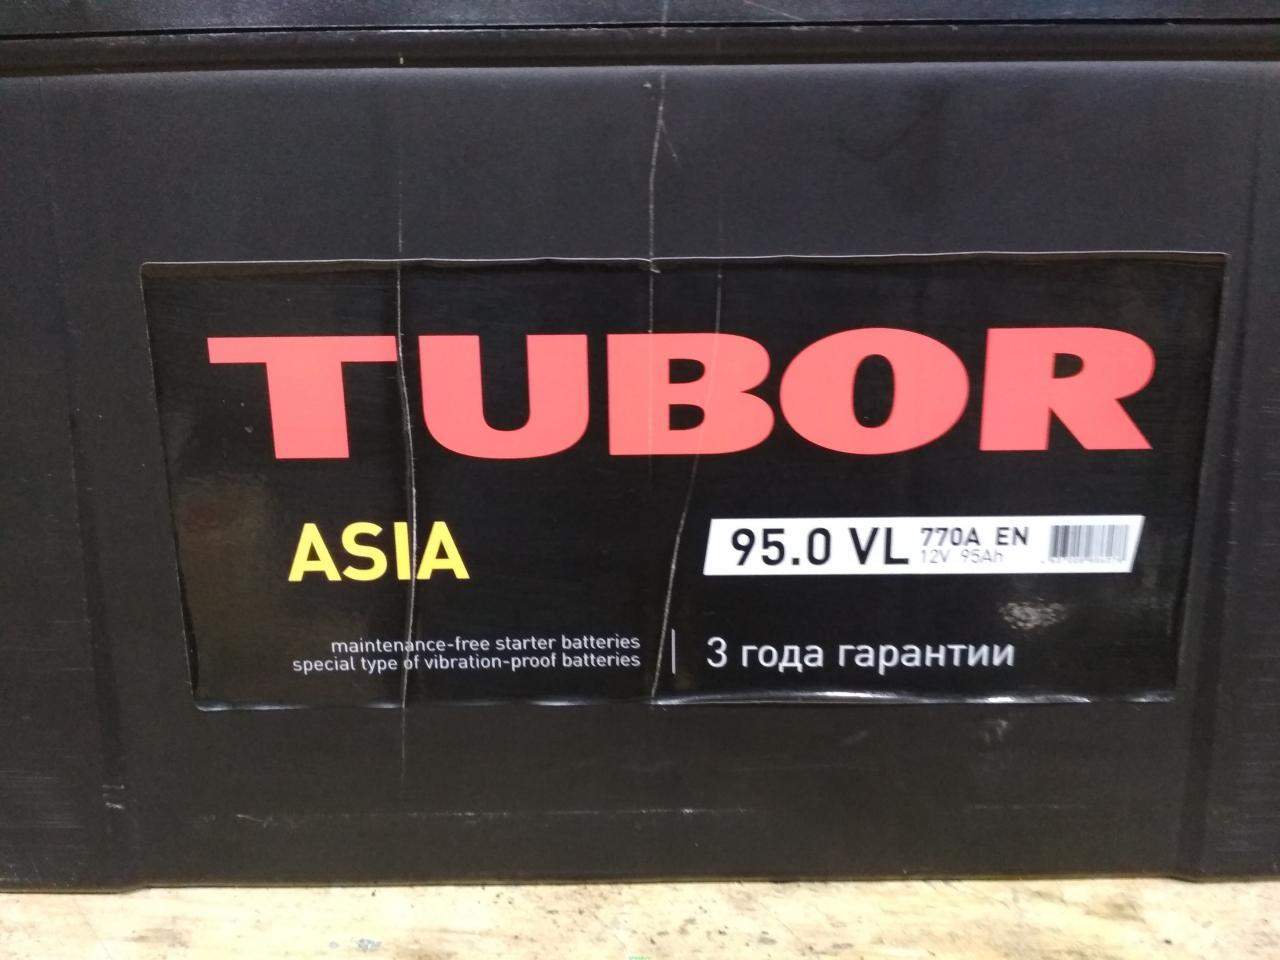 Asia 95. Tubor Asia 6ст-95.1. АКБ 70 Tubor о.п.( - +)Asia. Аккумулятор Тубор Азия 55 ам. АКБ Тубор 95.